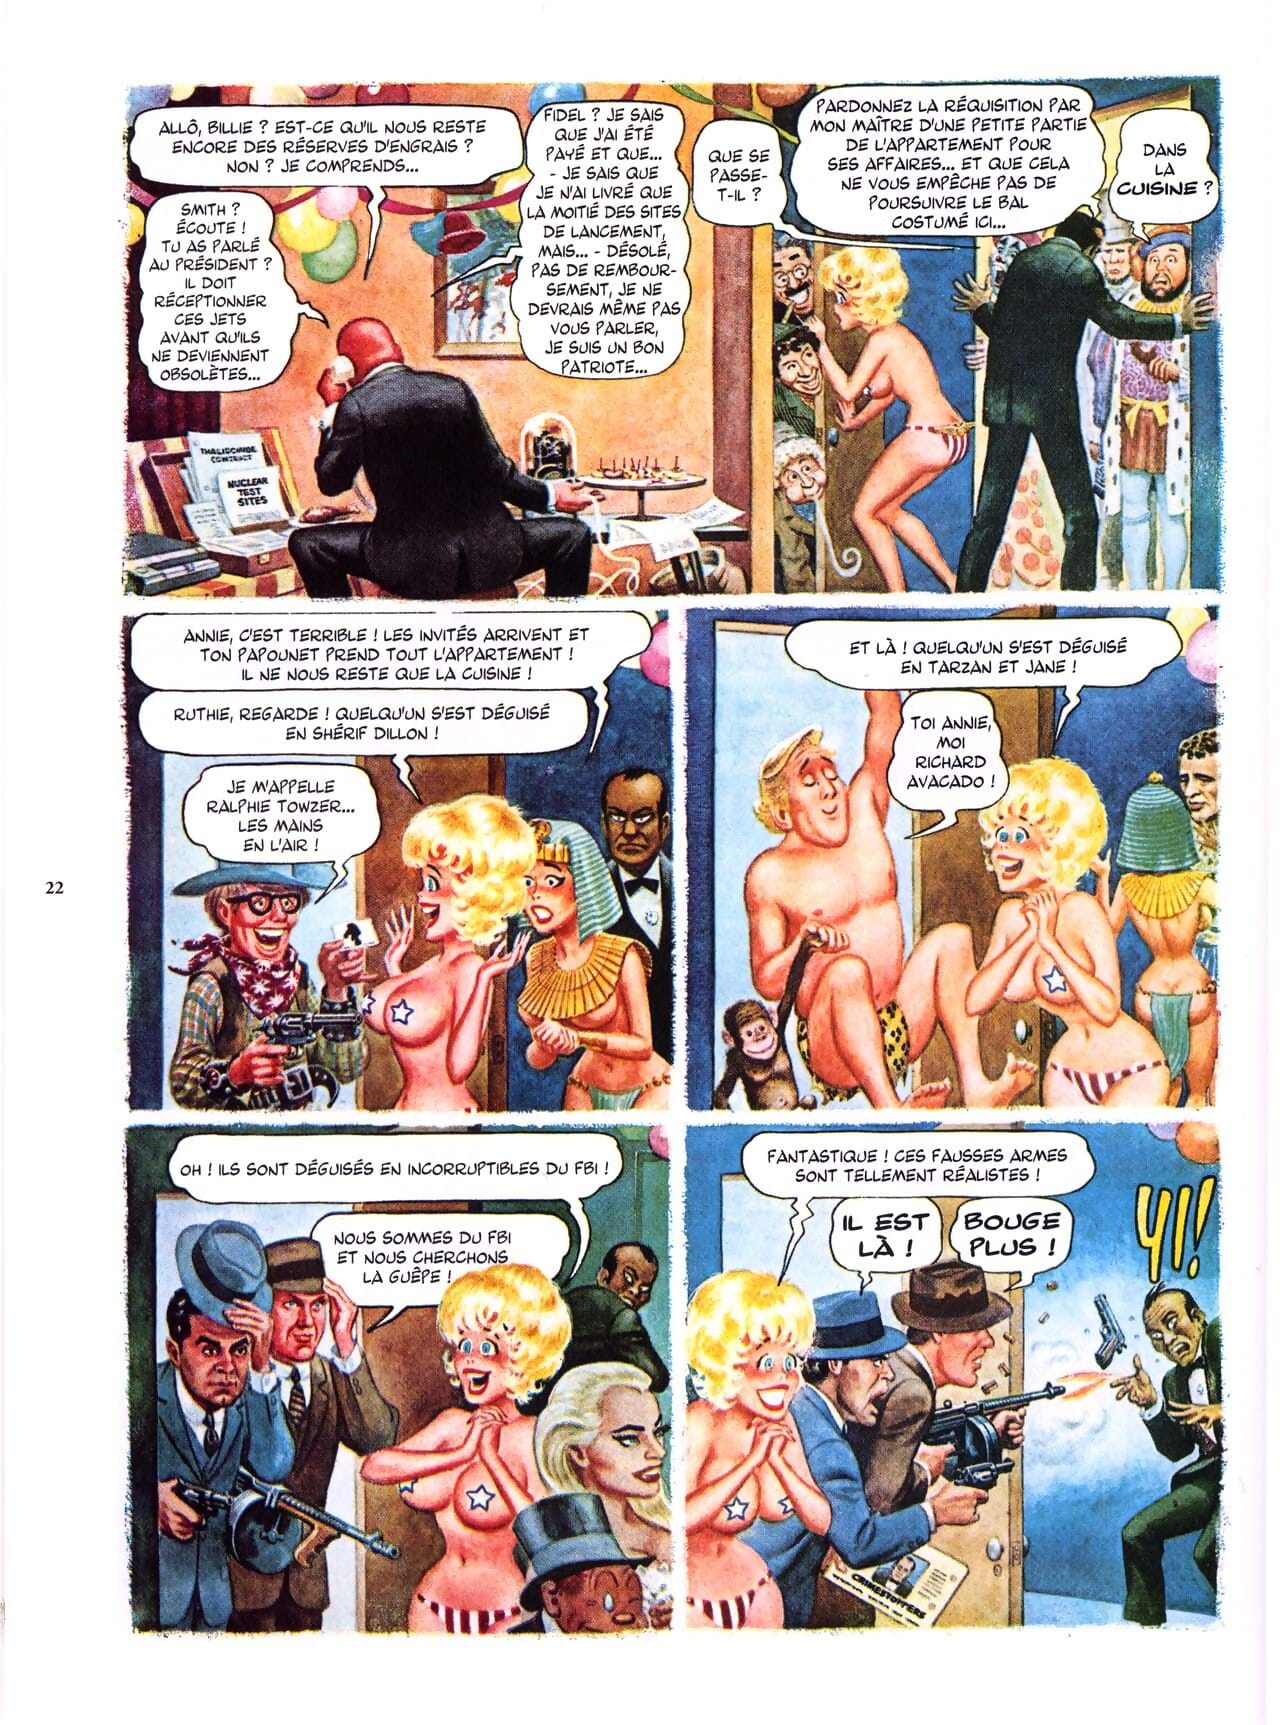 Playboys Little Annie Fanny Vol. 1 - 1962-1965 page 1